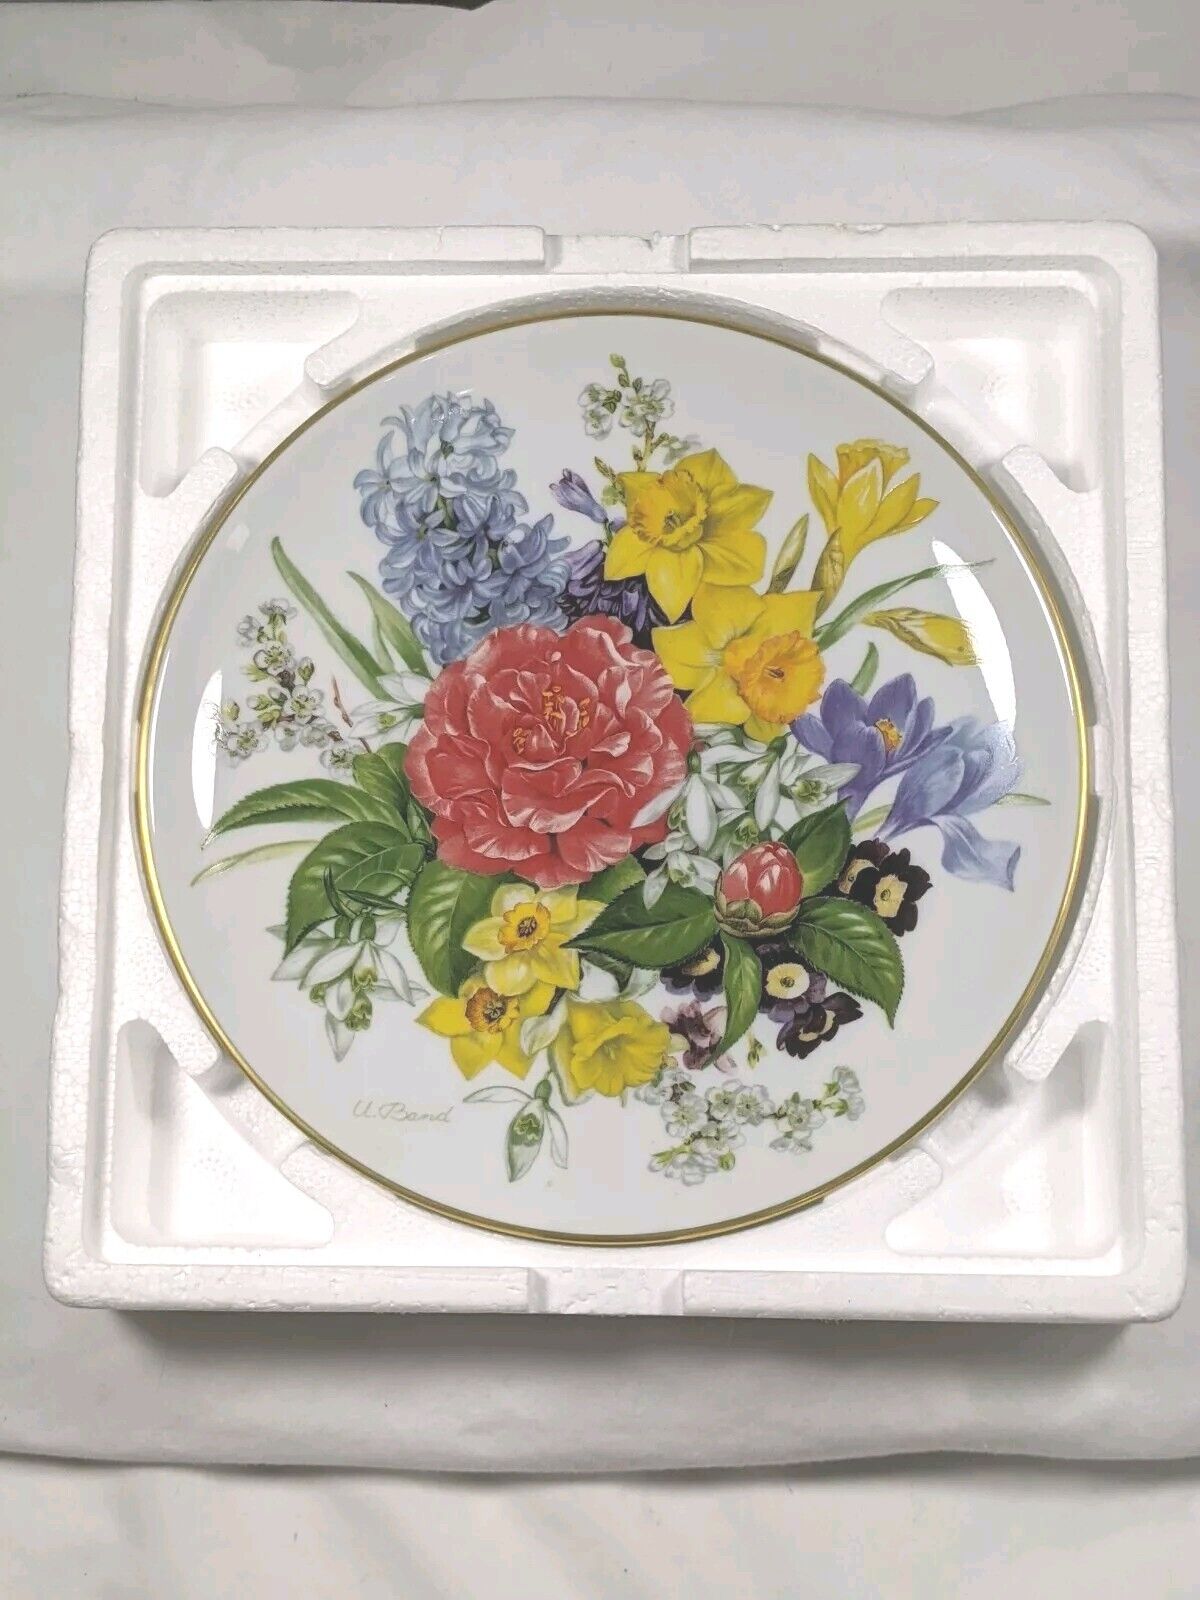 1987 Hutschenreuther Ursula Band Teller Porcelain Plate \